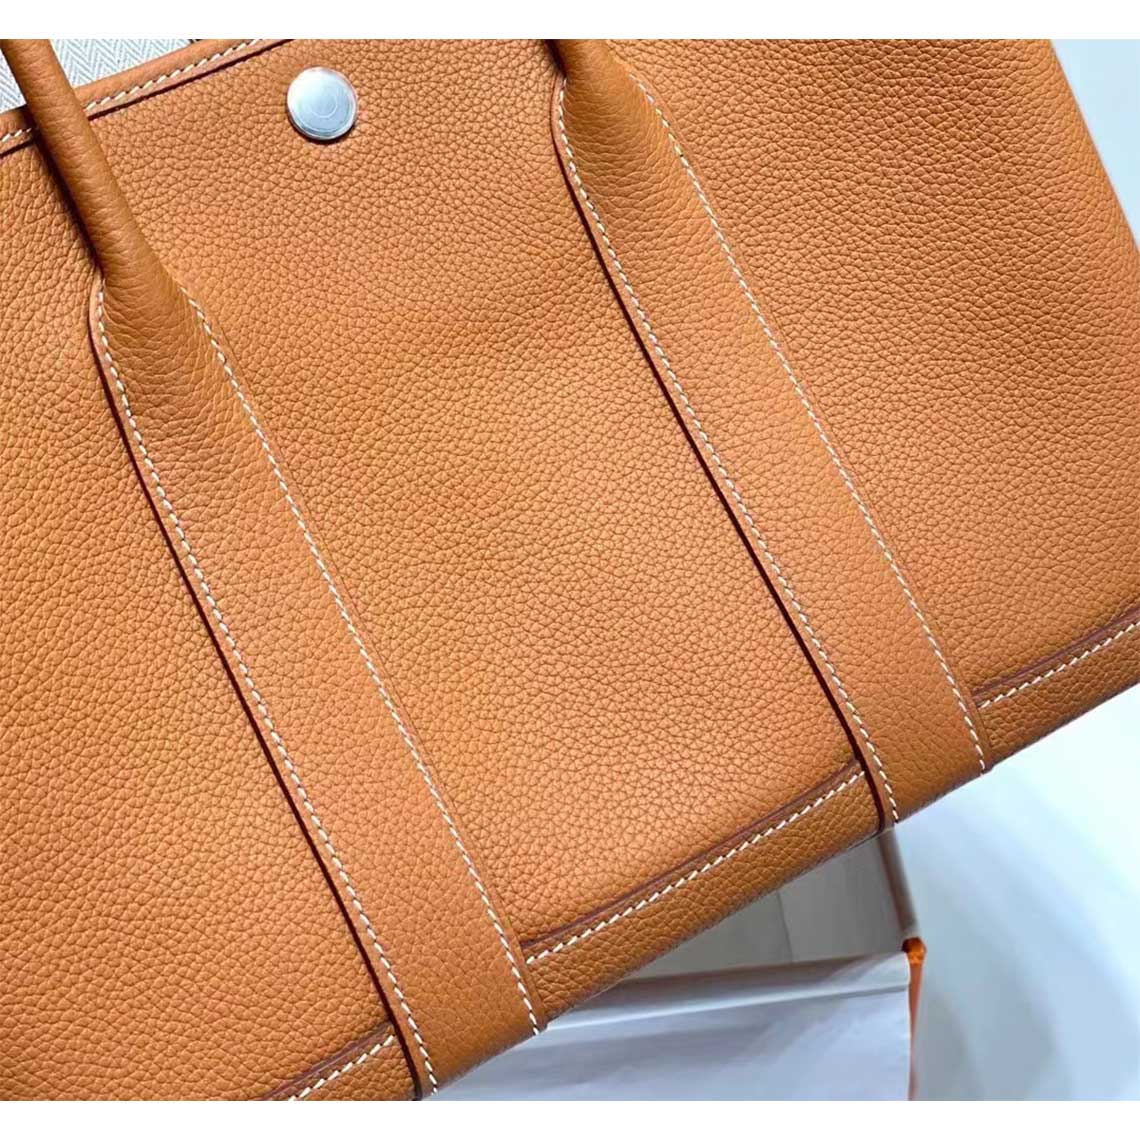 POPSEWING® Full Grain Leather New Garden Party Handbag - Advanced DIY Kits